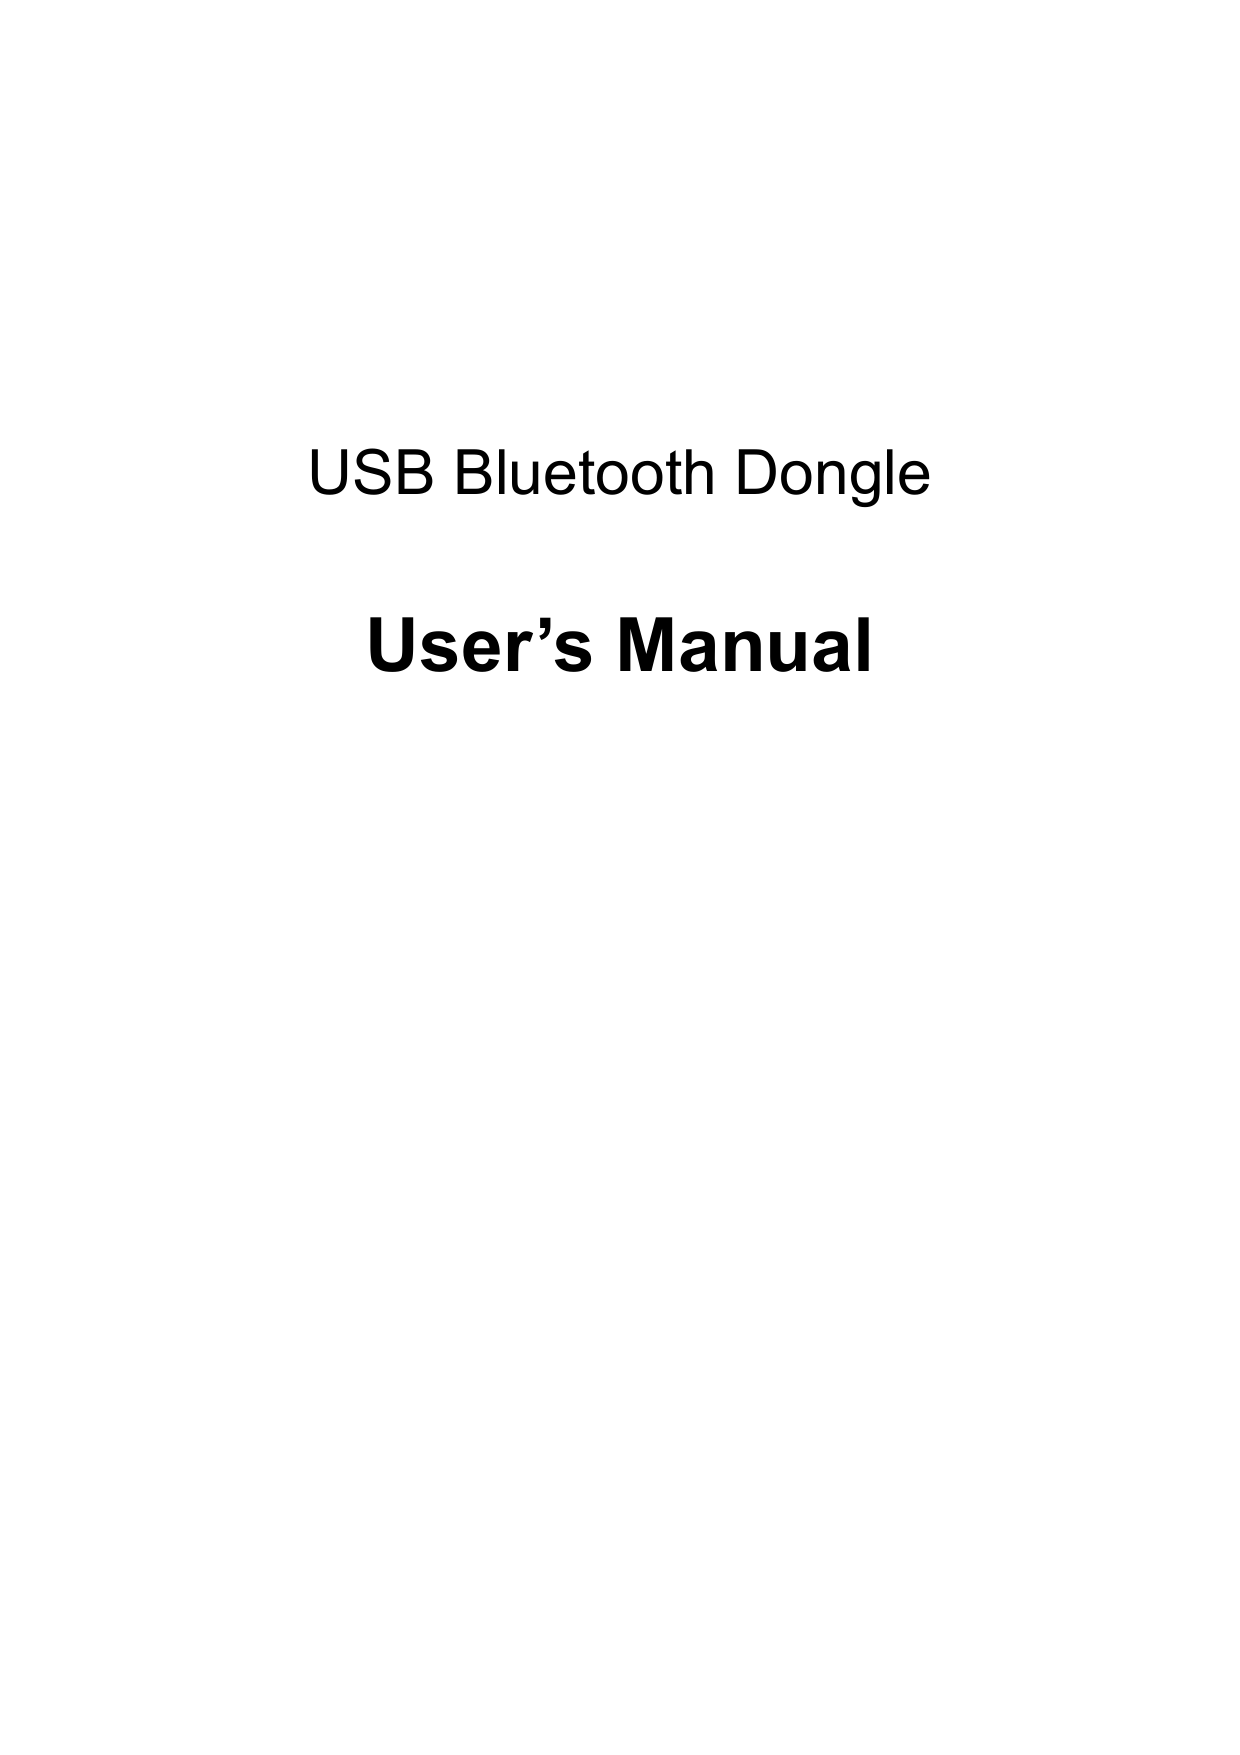      USB Bluetooth Dongle  User’s Manual   